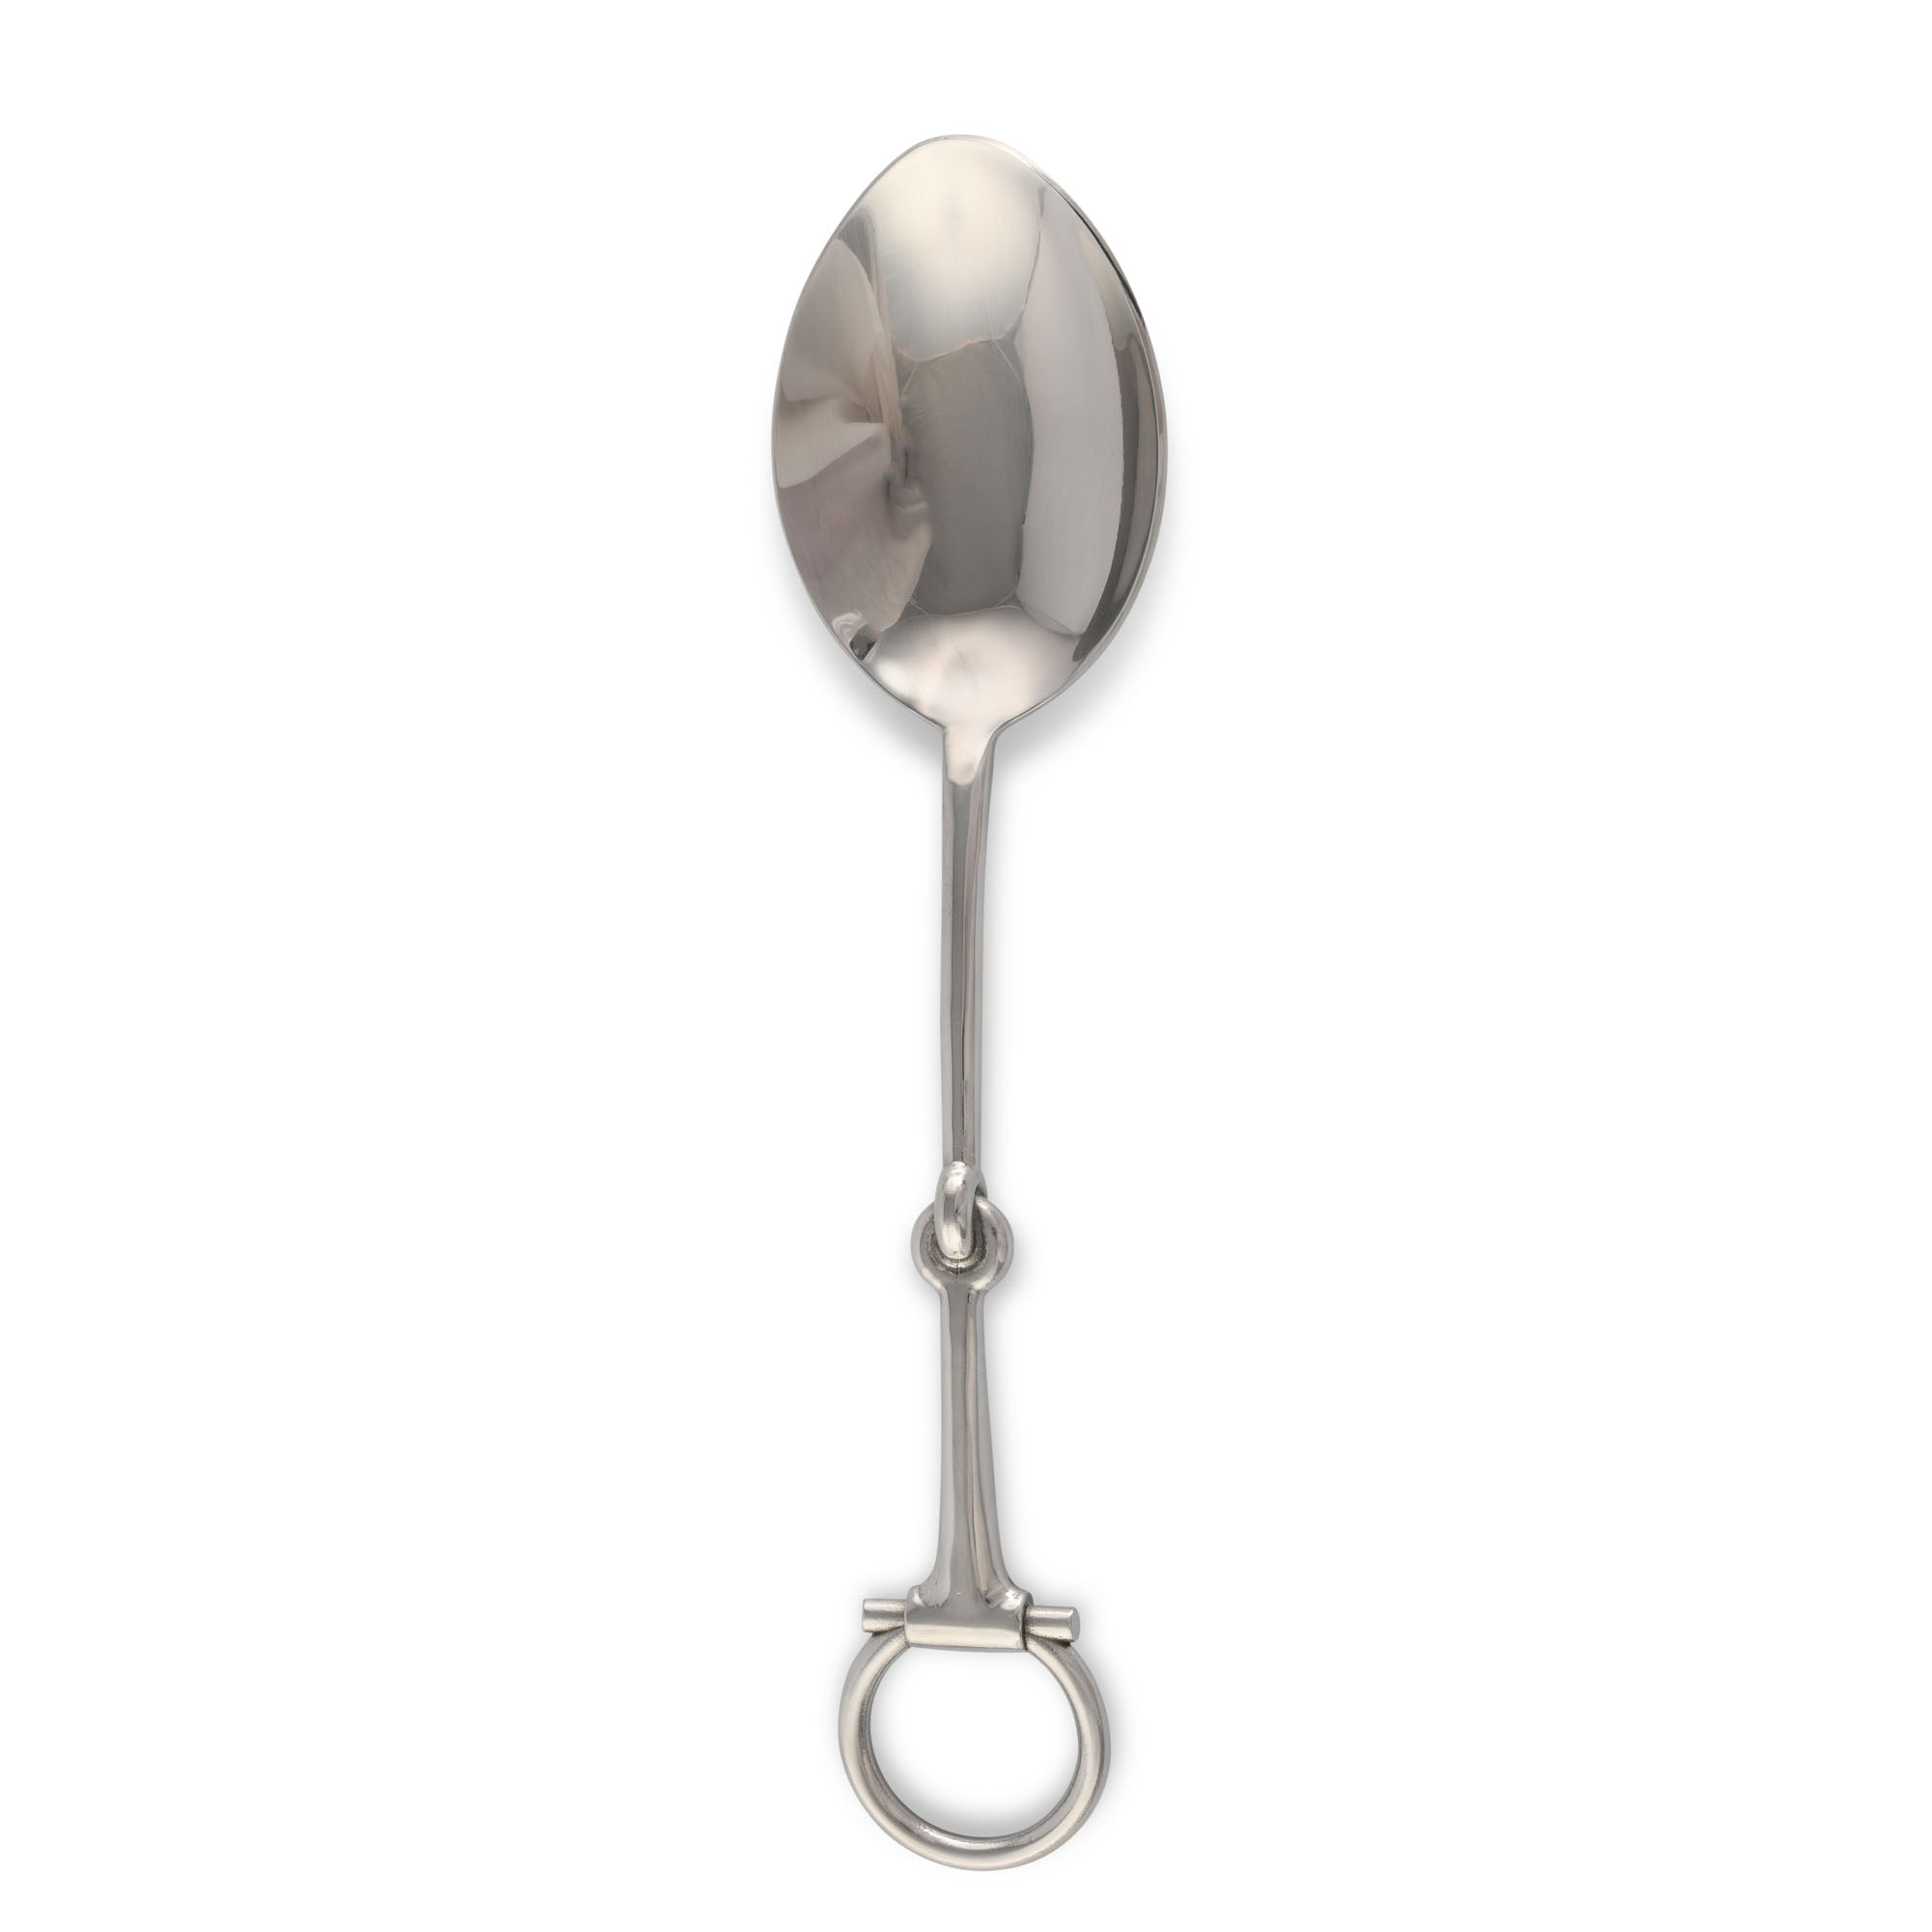 Vagabond House Bit Serving Spoon - Stainless Steel Matt Silver Product Image